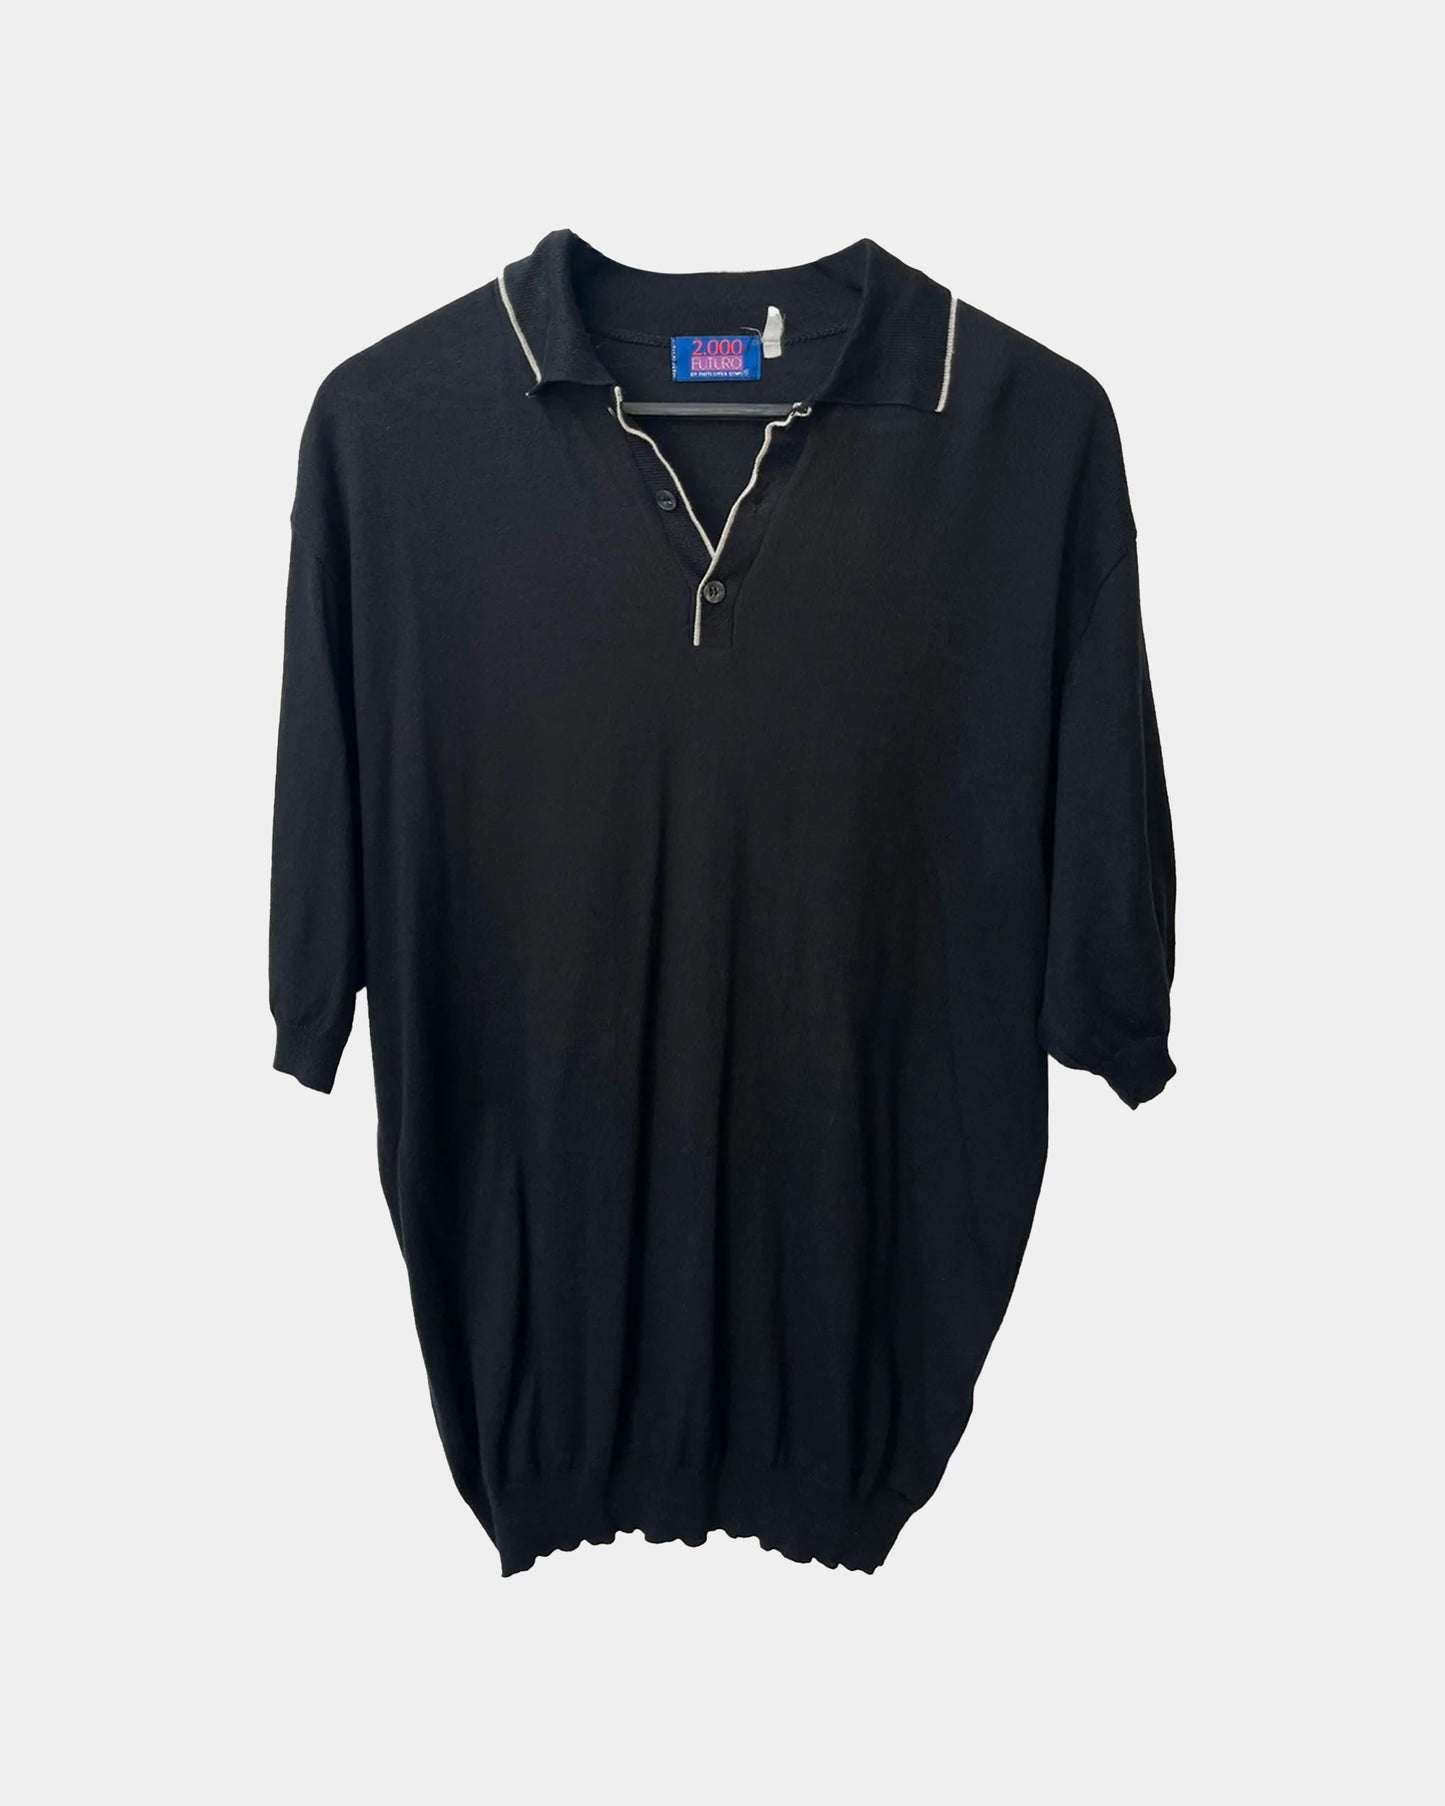 Vintage 80s Black Soft Thin Polo Shirt BEAUTIFUL 4Gseller